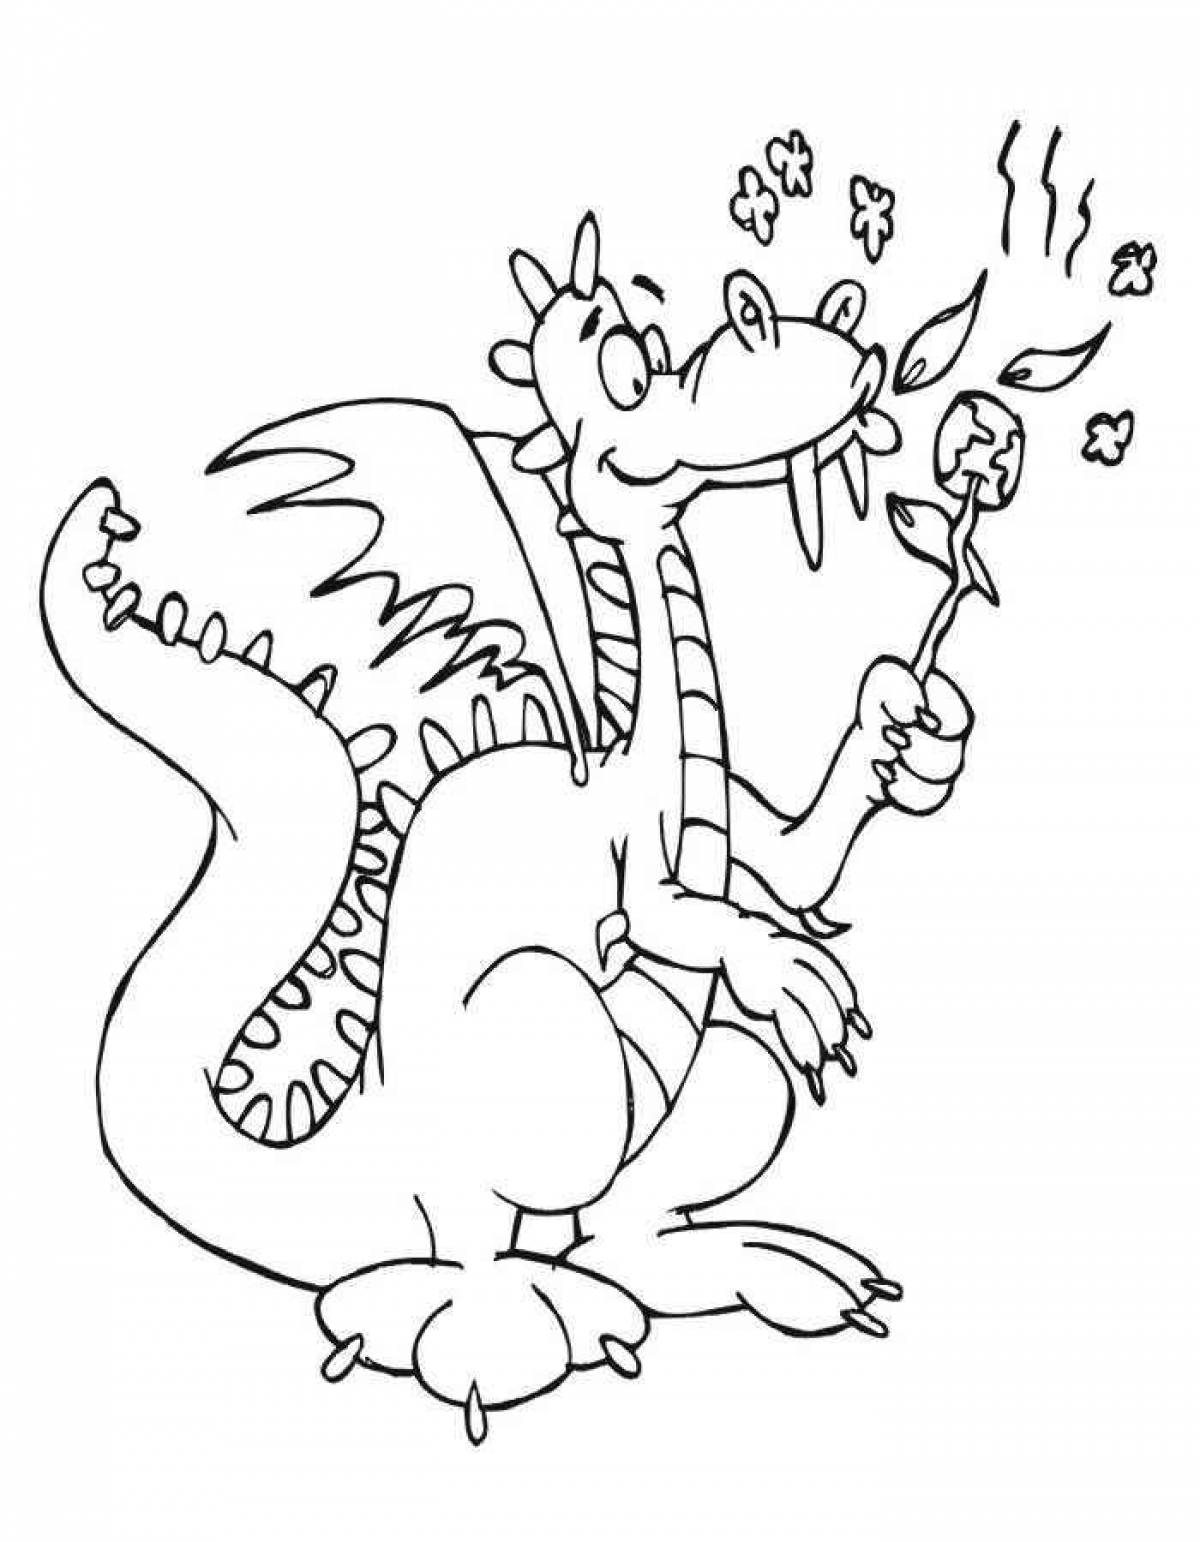 Incredible dragon coloring book for kids